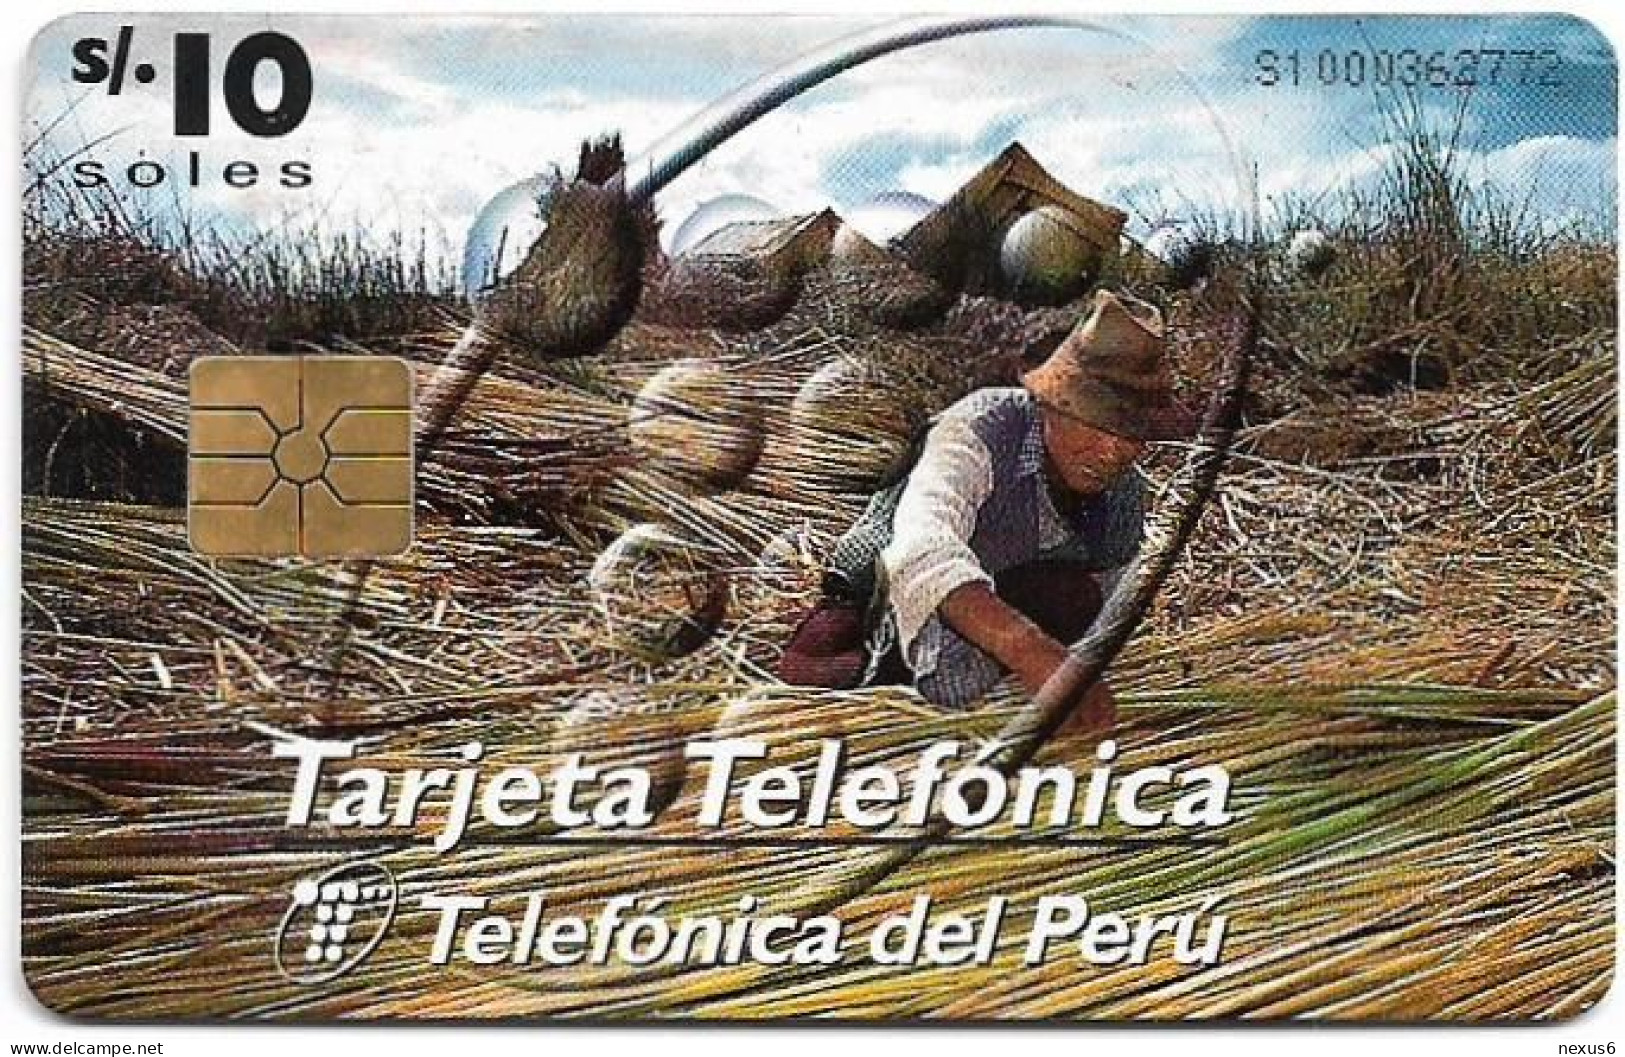 Peru - Telefónica - Andes Man Working, Gem1B Not Symmetric Red, Glossy, 10Sol, Used - Peru